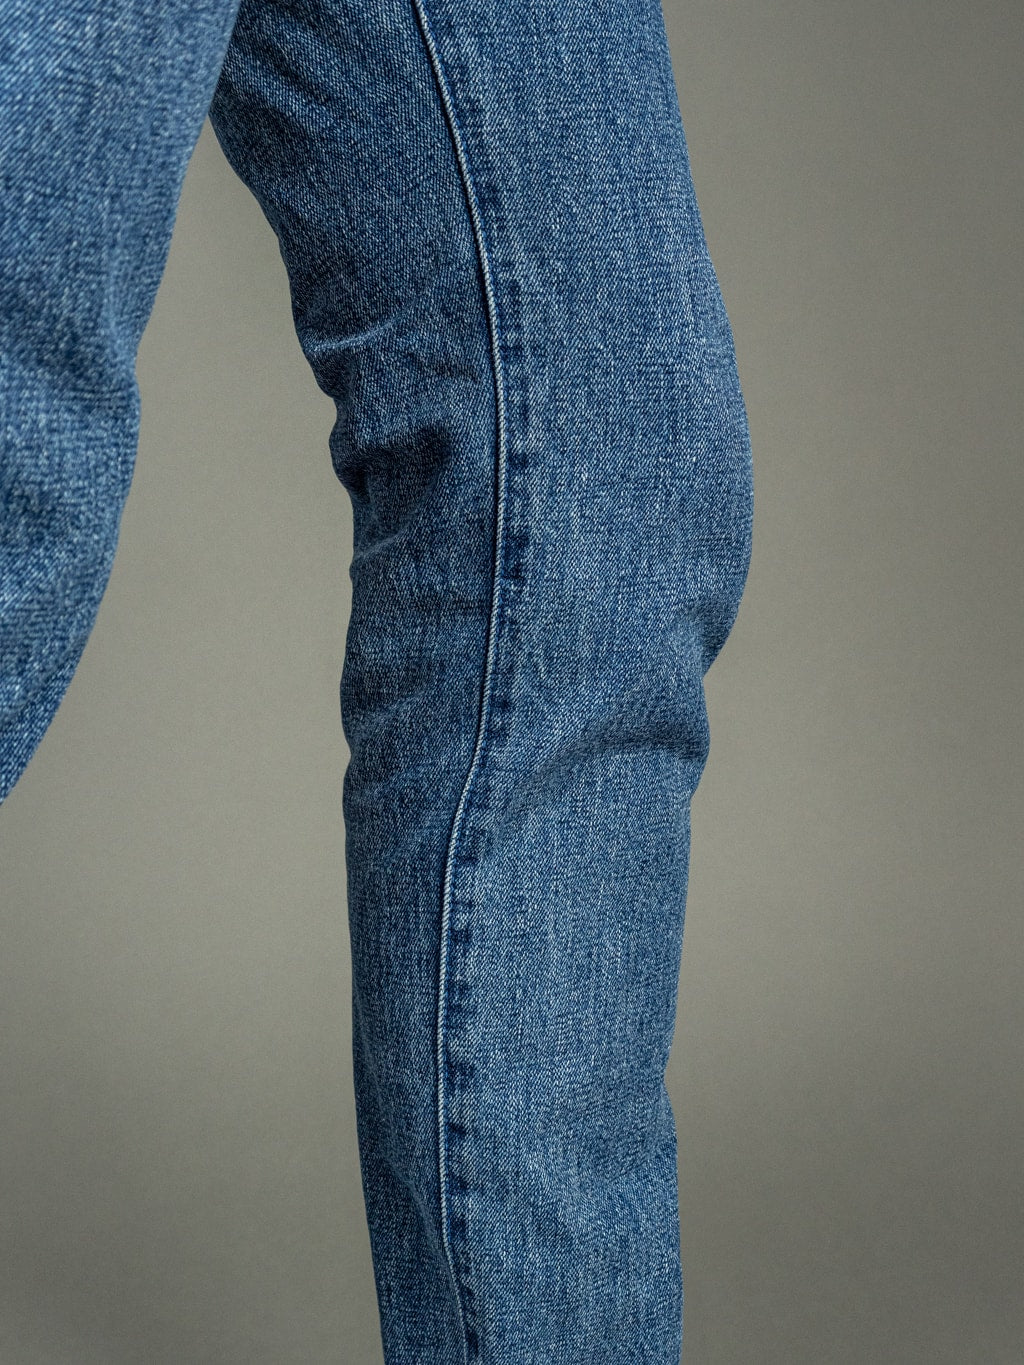 Tanuki Yurai Stonewash High Tapered Jeans Inseam